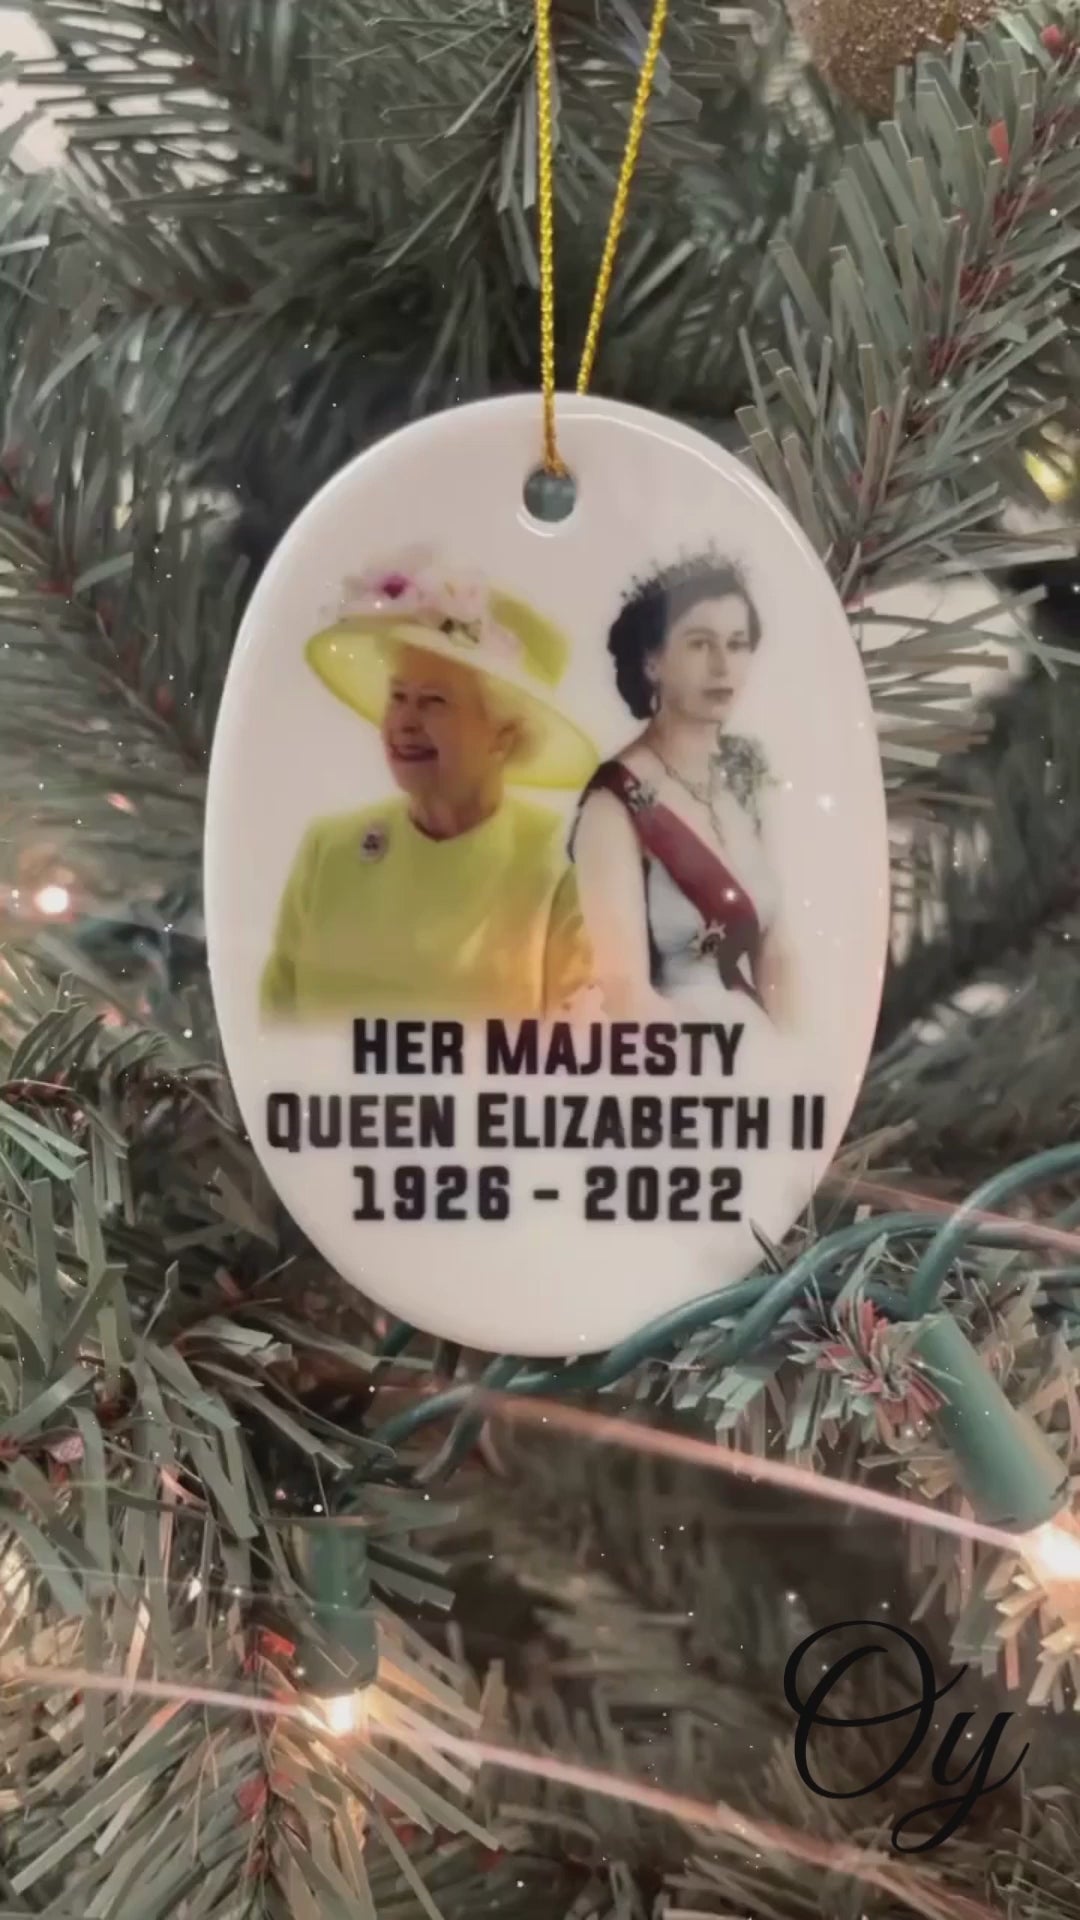 Queen Elizabeth II Honorary Christmas Ornament